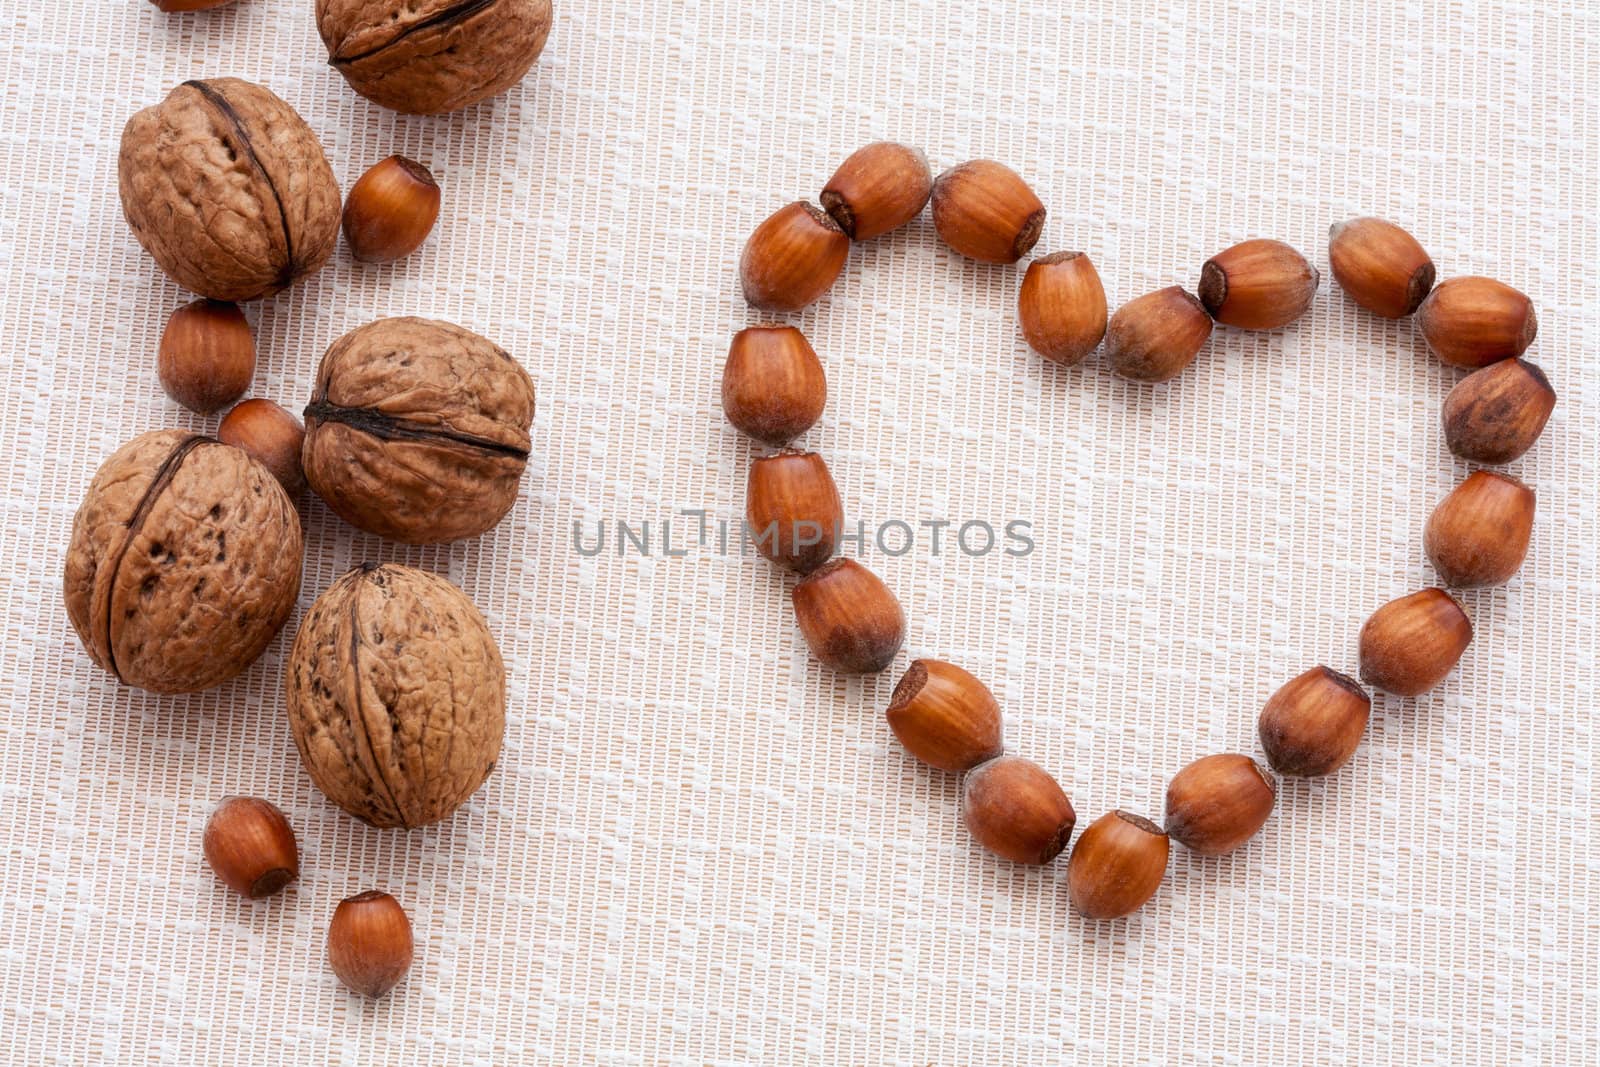 walnuts, hazelnuts on a wooden background by sfinks